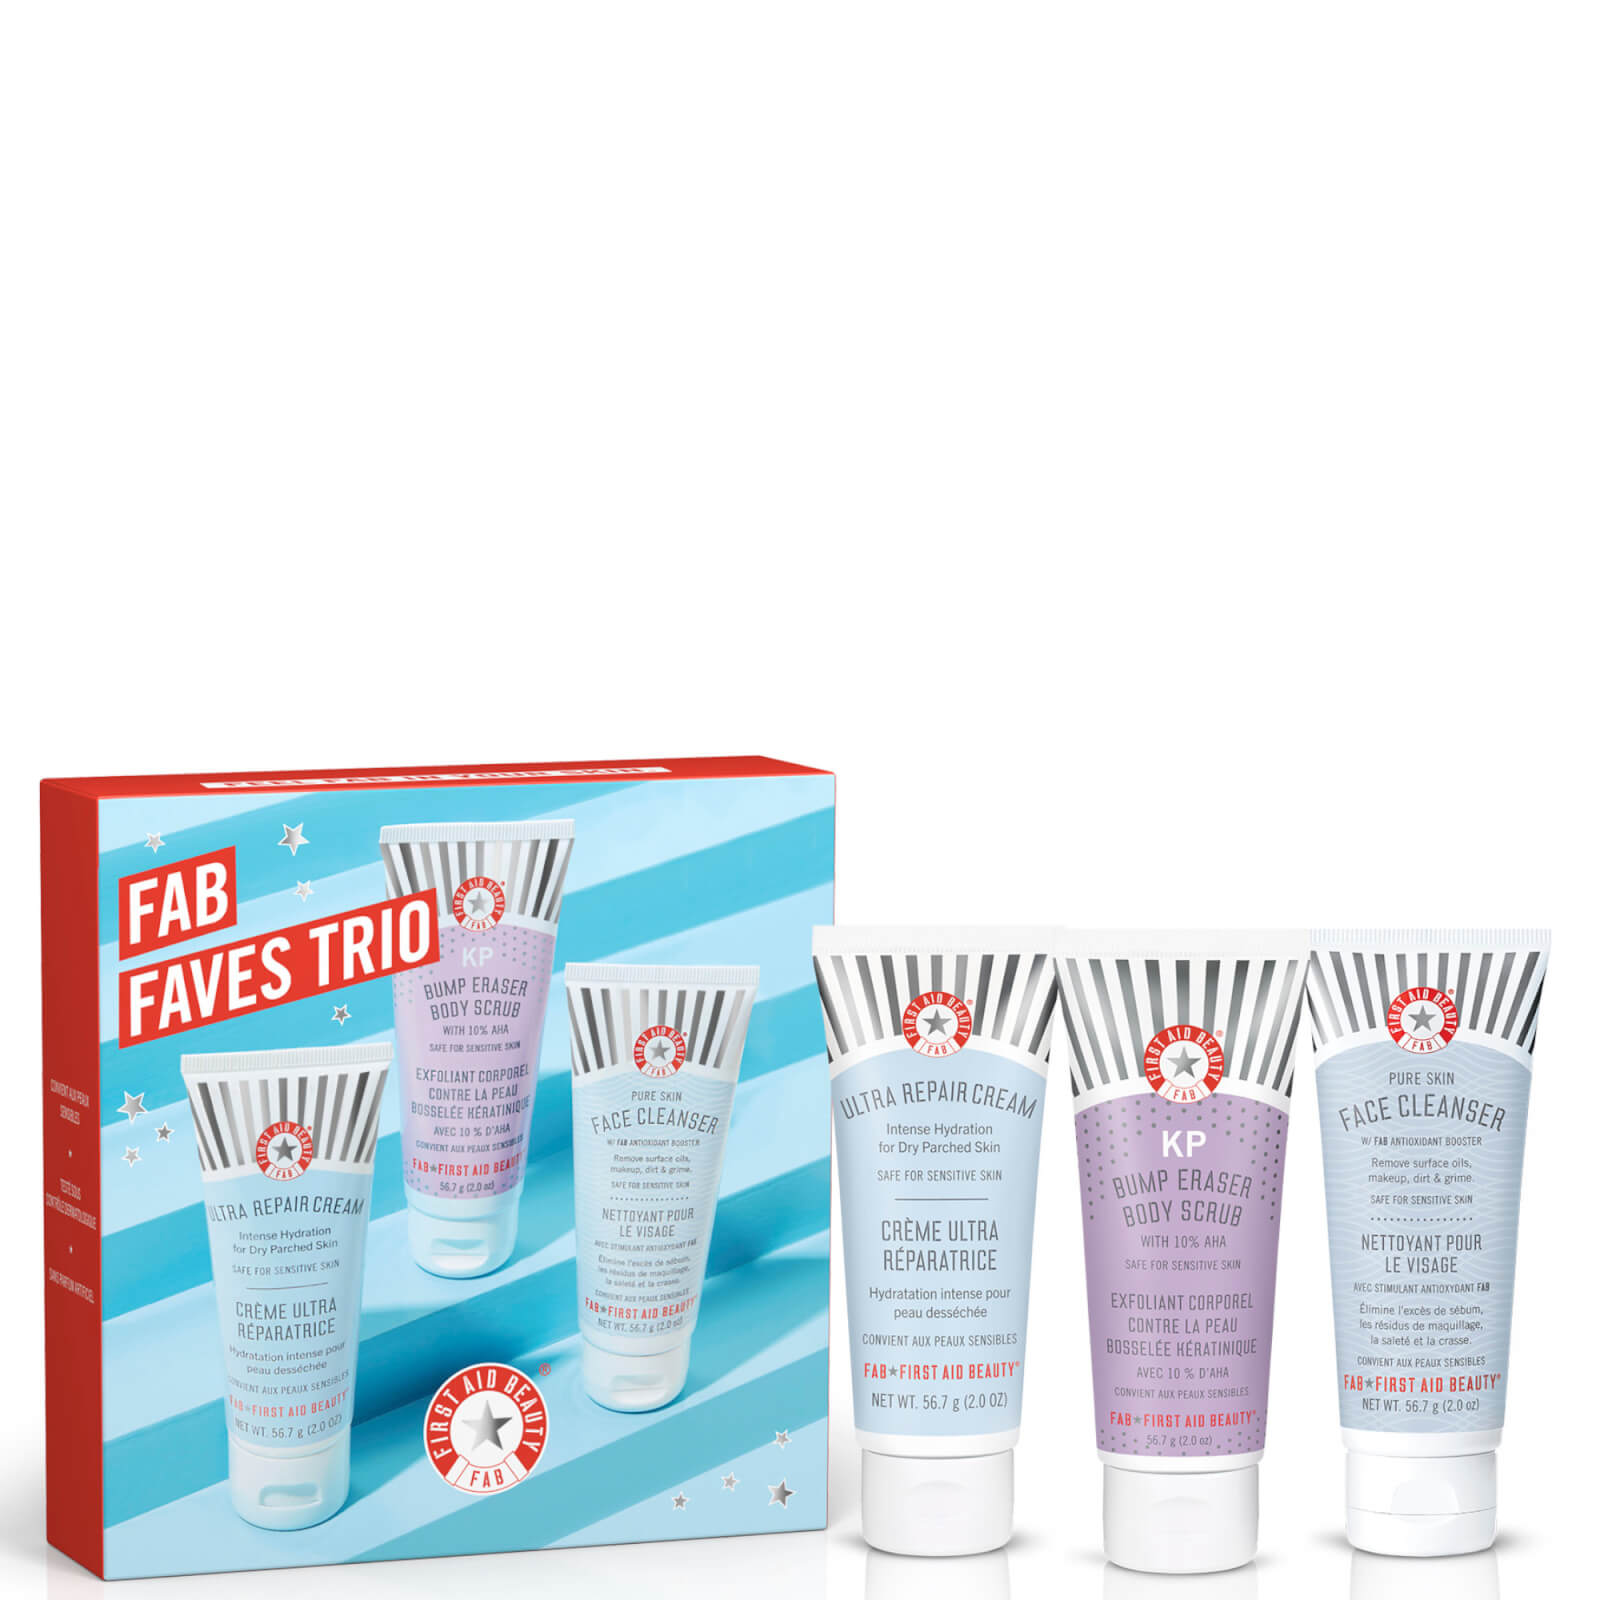 First Aid Beauty FAB Faves Trio Kit lookfantastic.com imagine